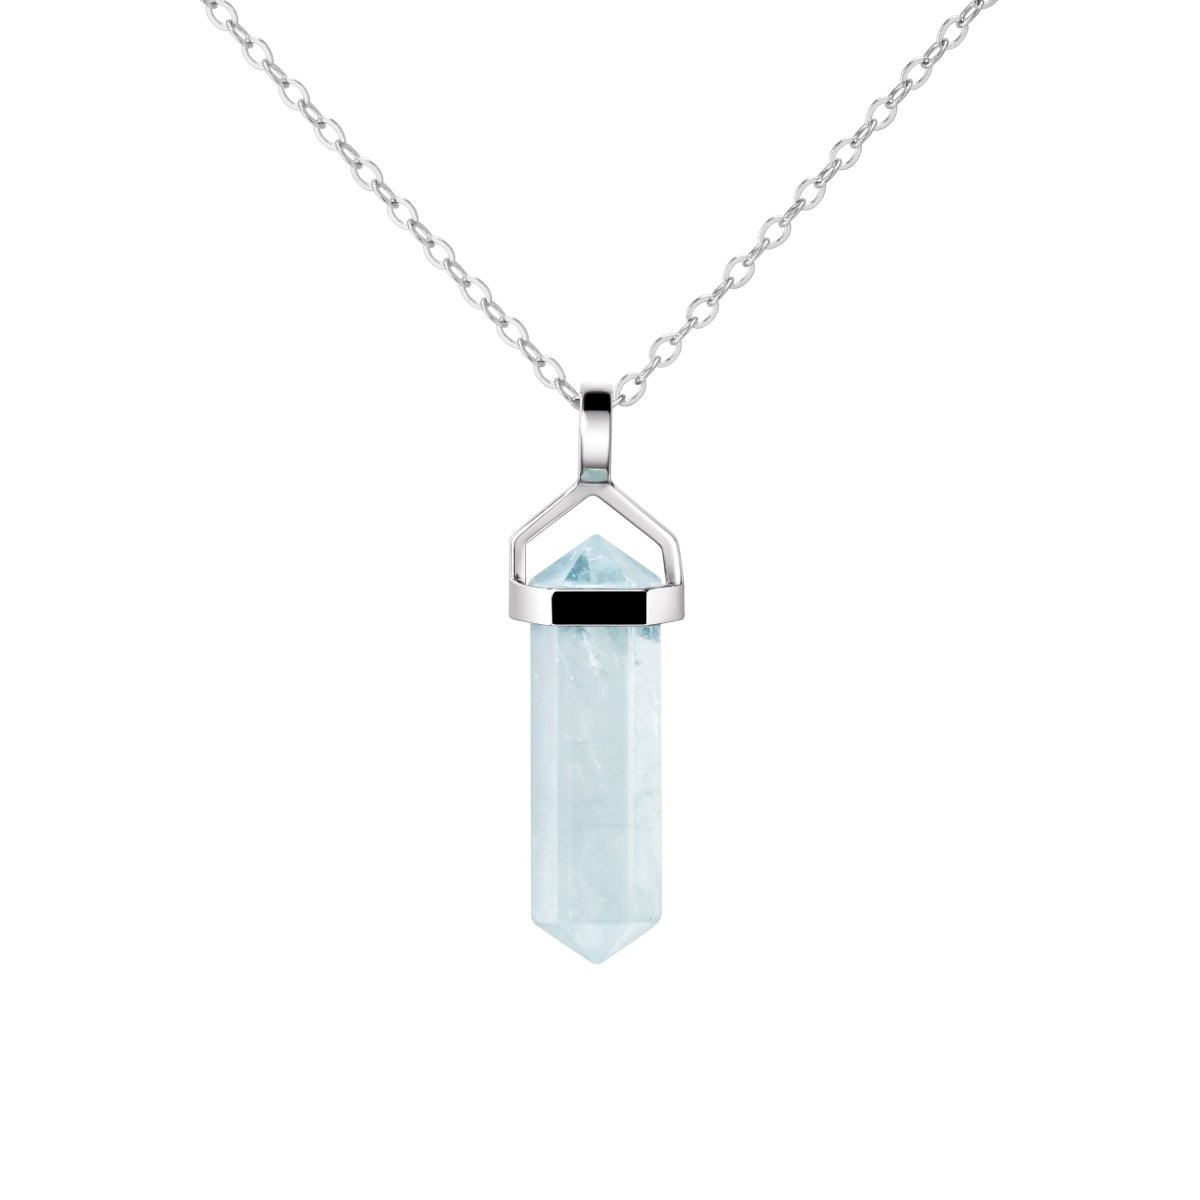 Necklace Gifts Raw Blue Aquamarine Crystal Pendant Healing Protection Women  Men | eBay